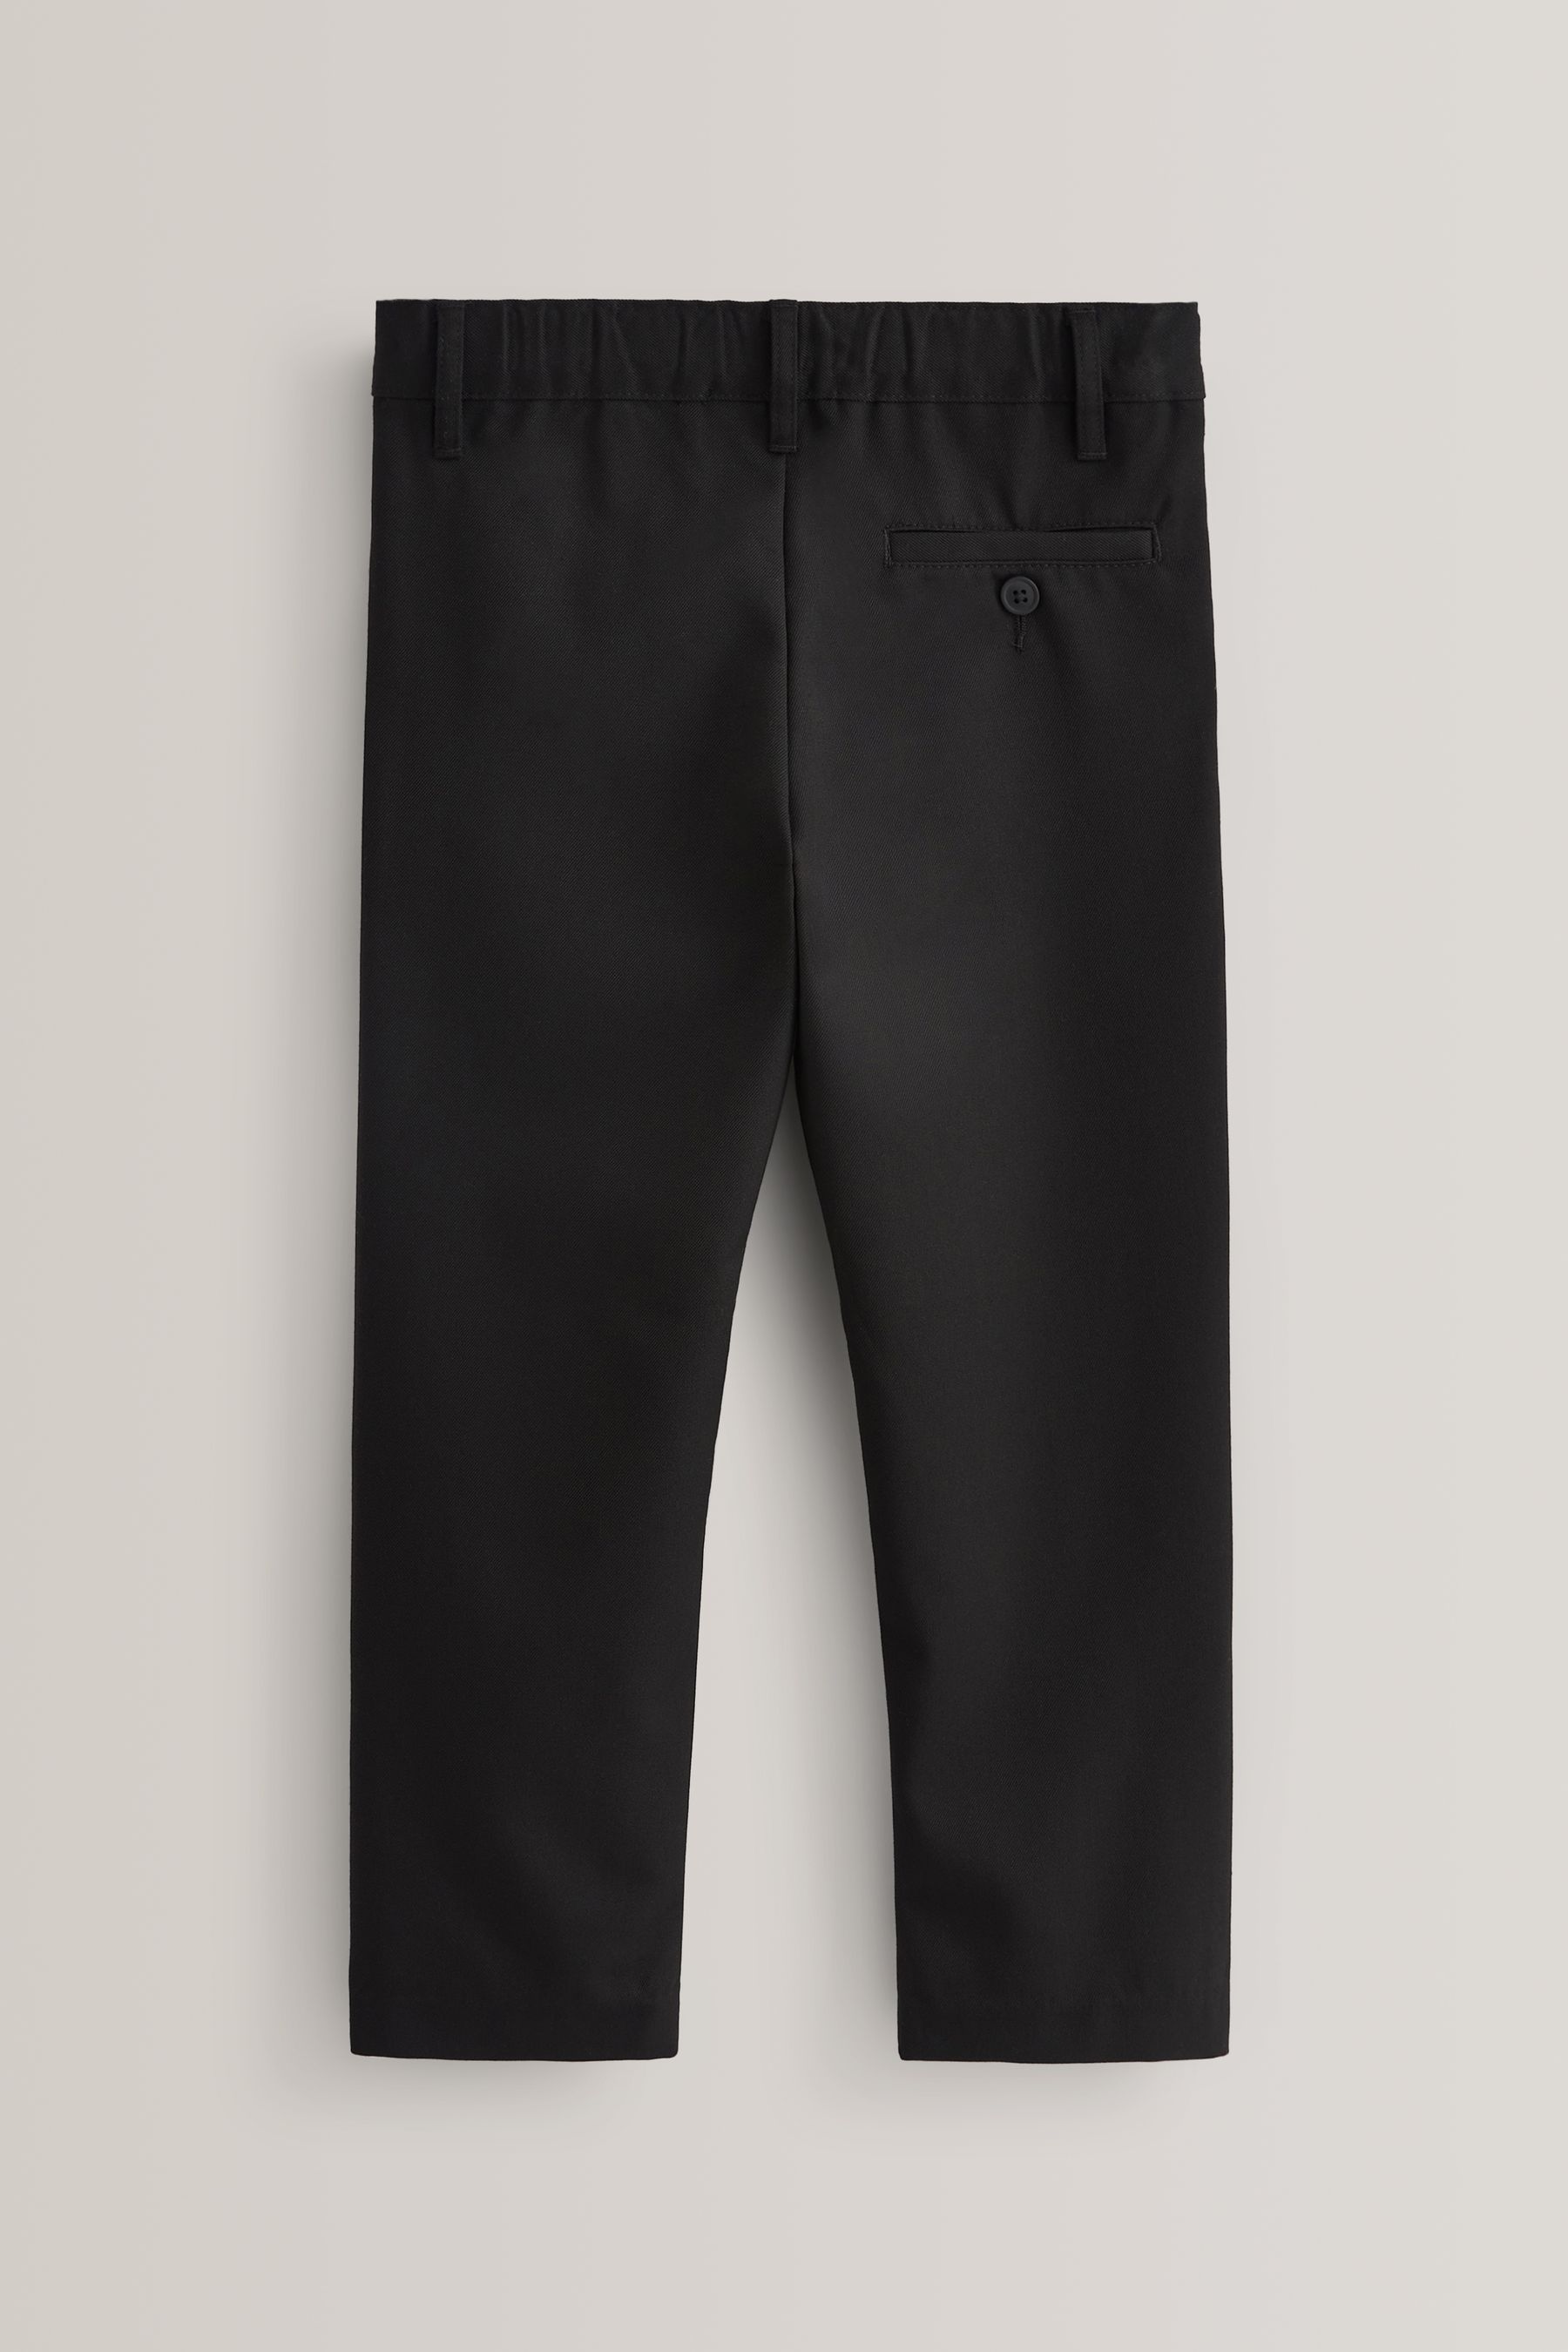 Buy Black Plus Waist School Formal Slim Leg Trousers (3-17yrs) from the ...